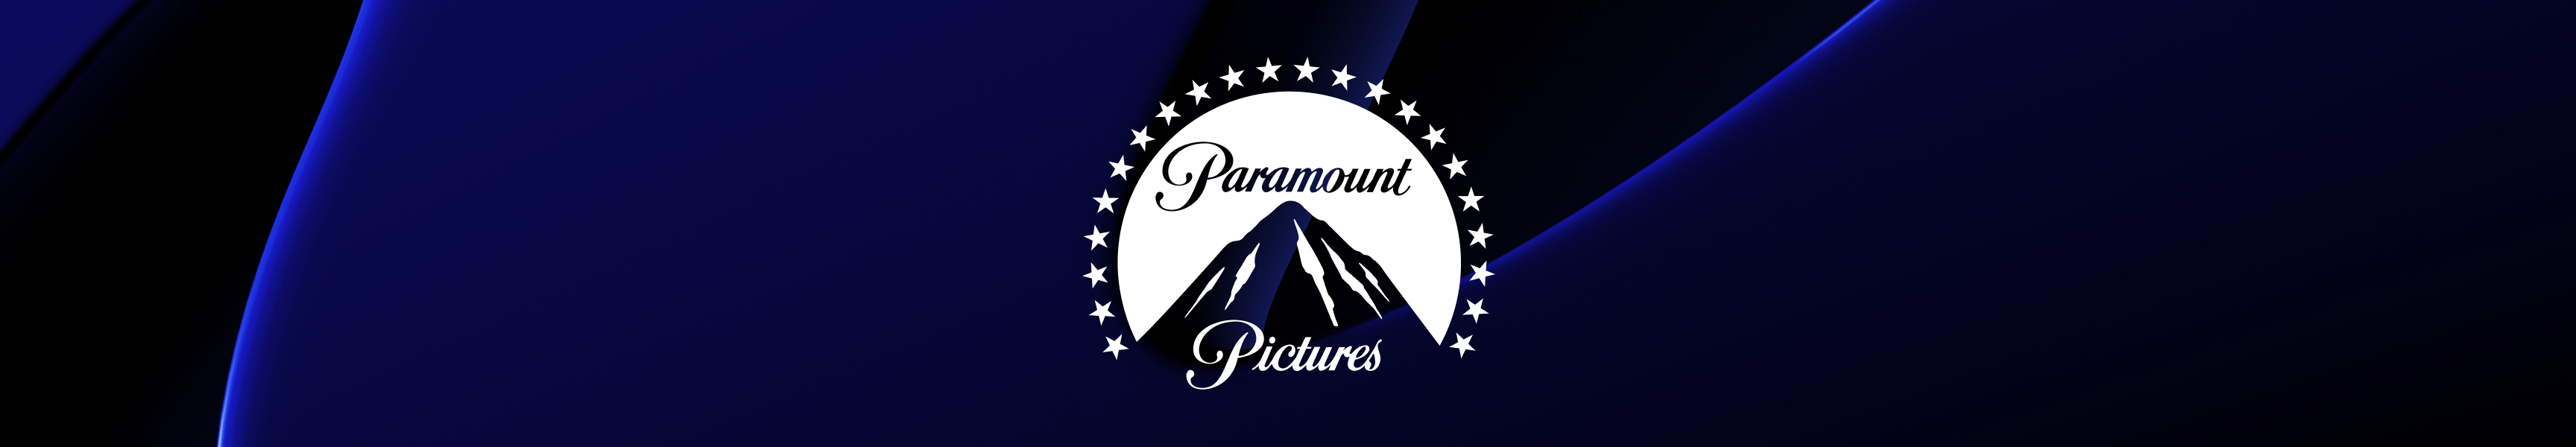 Paramount Pictures Accessories